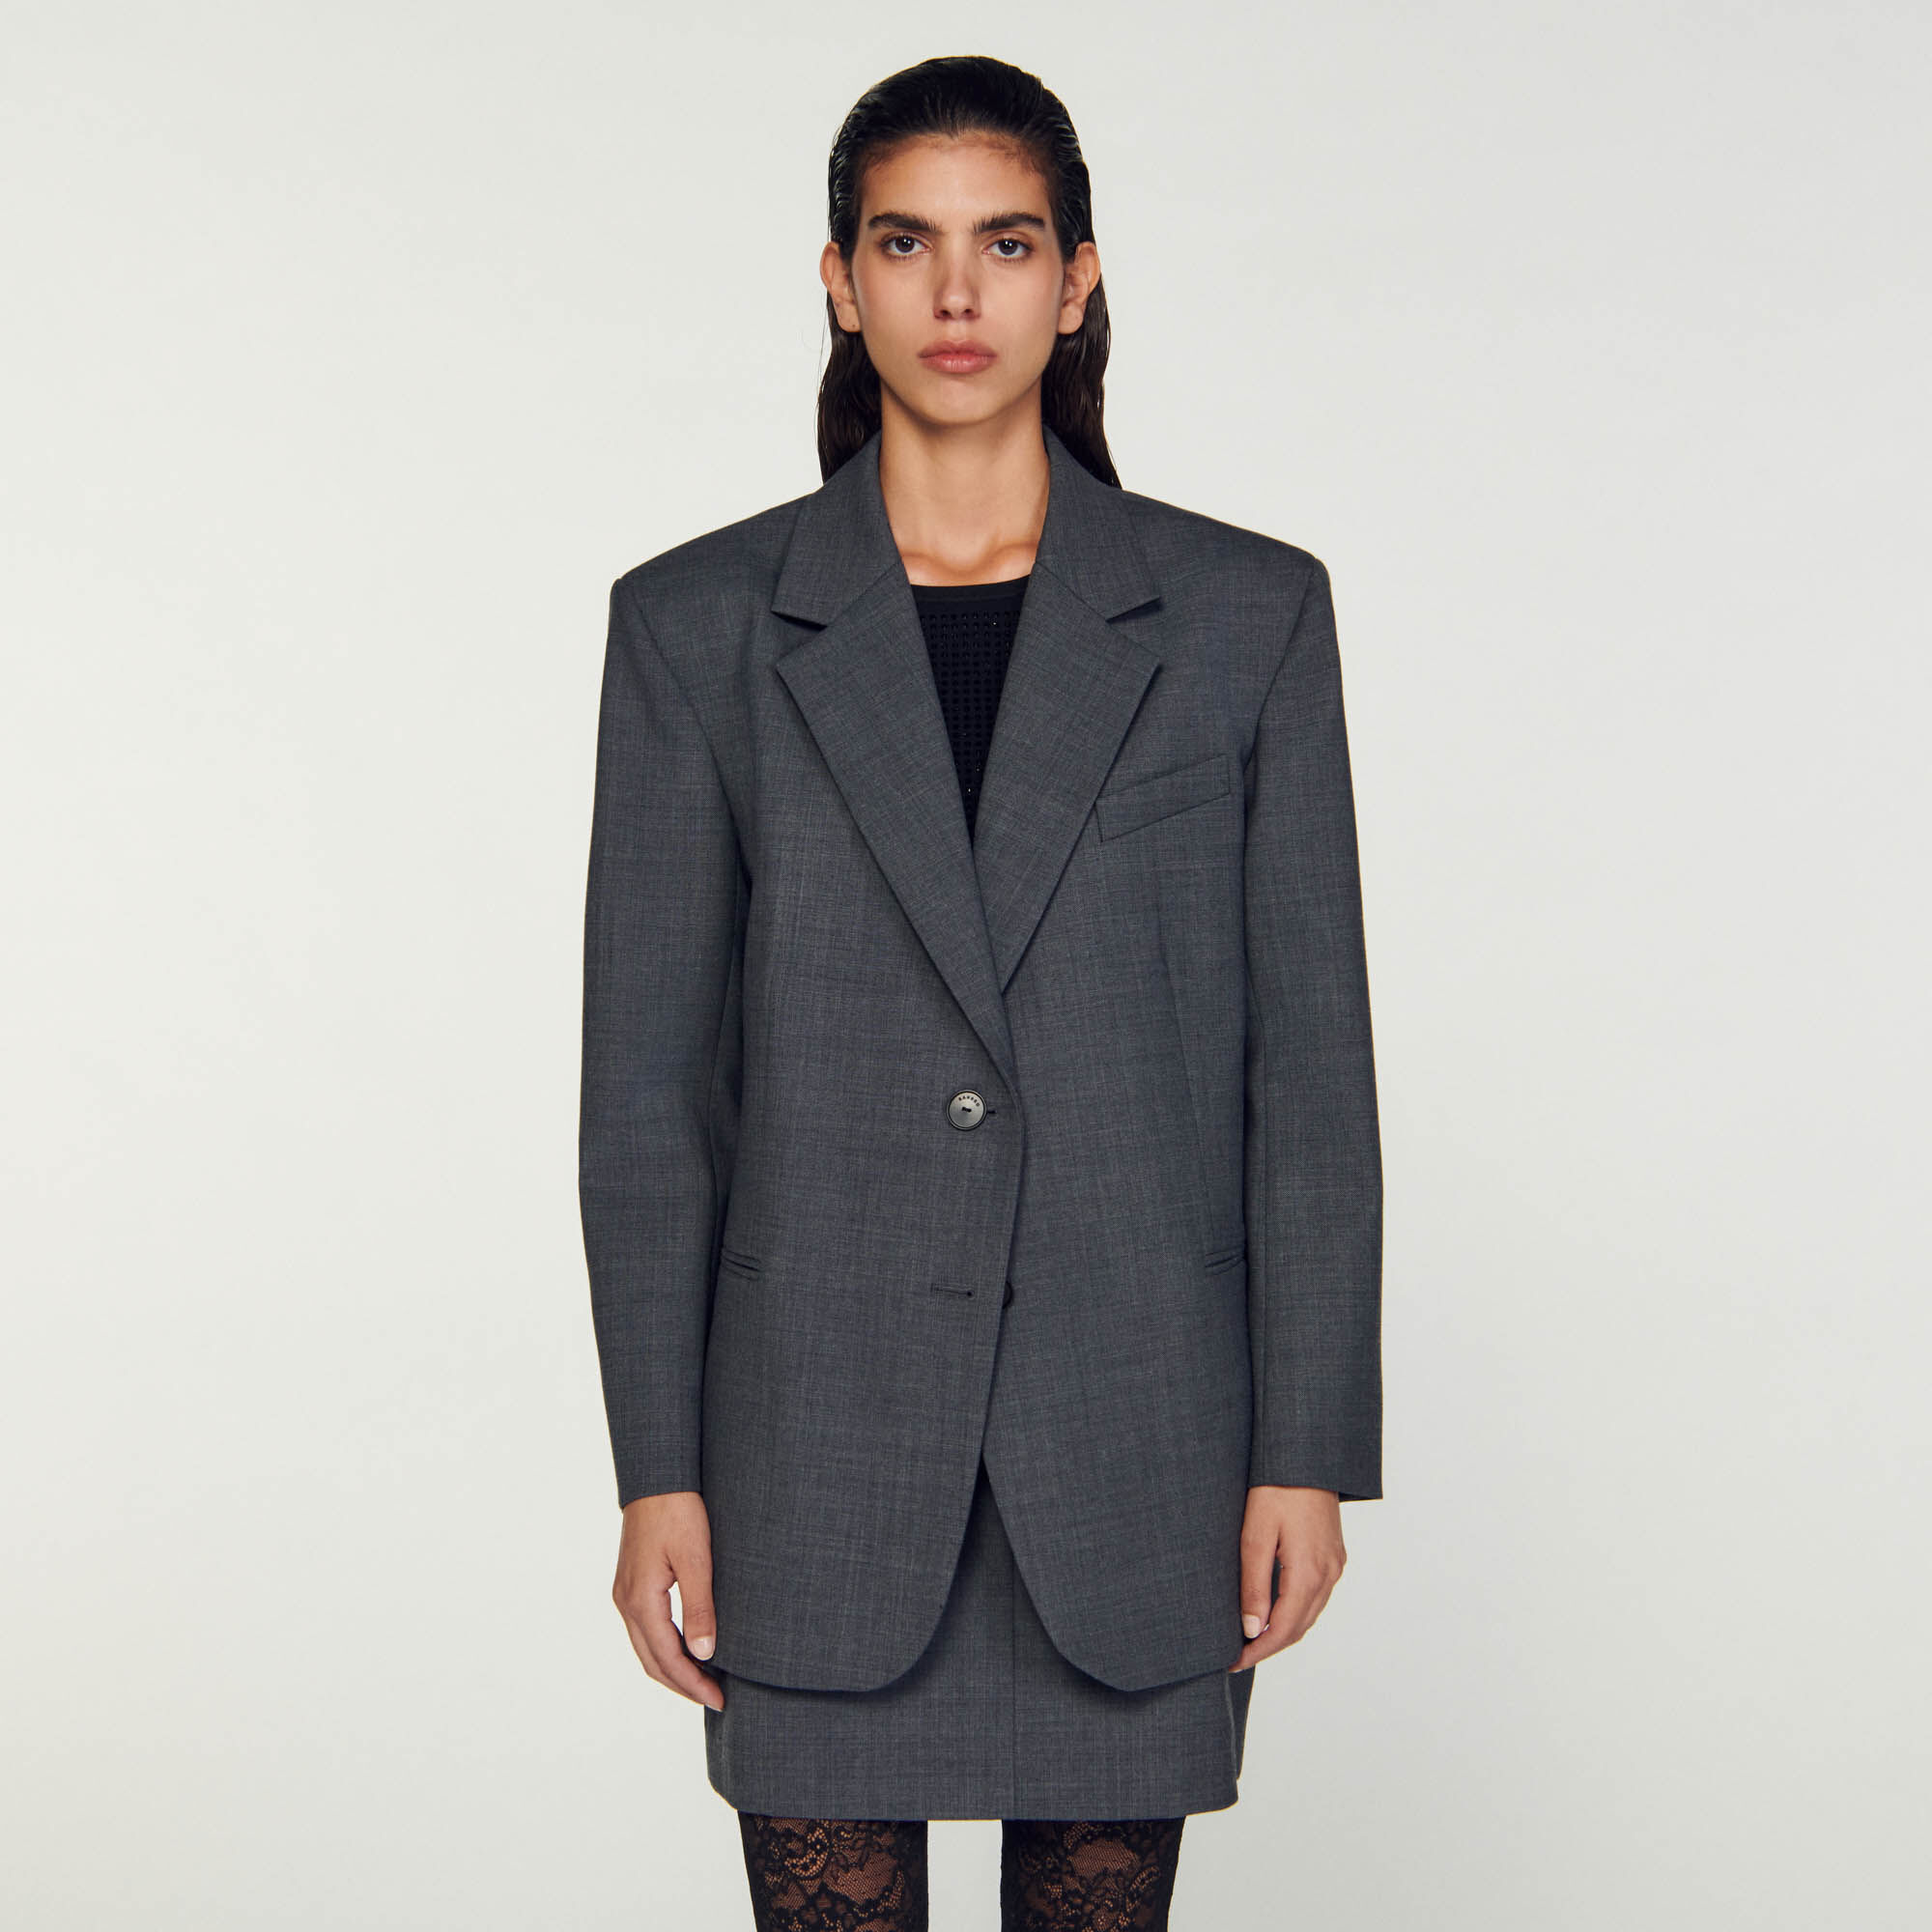 Oversized suit jacket SFPVE00840 - Blazers & Jackets | Sandro Paris